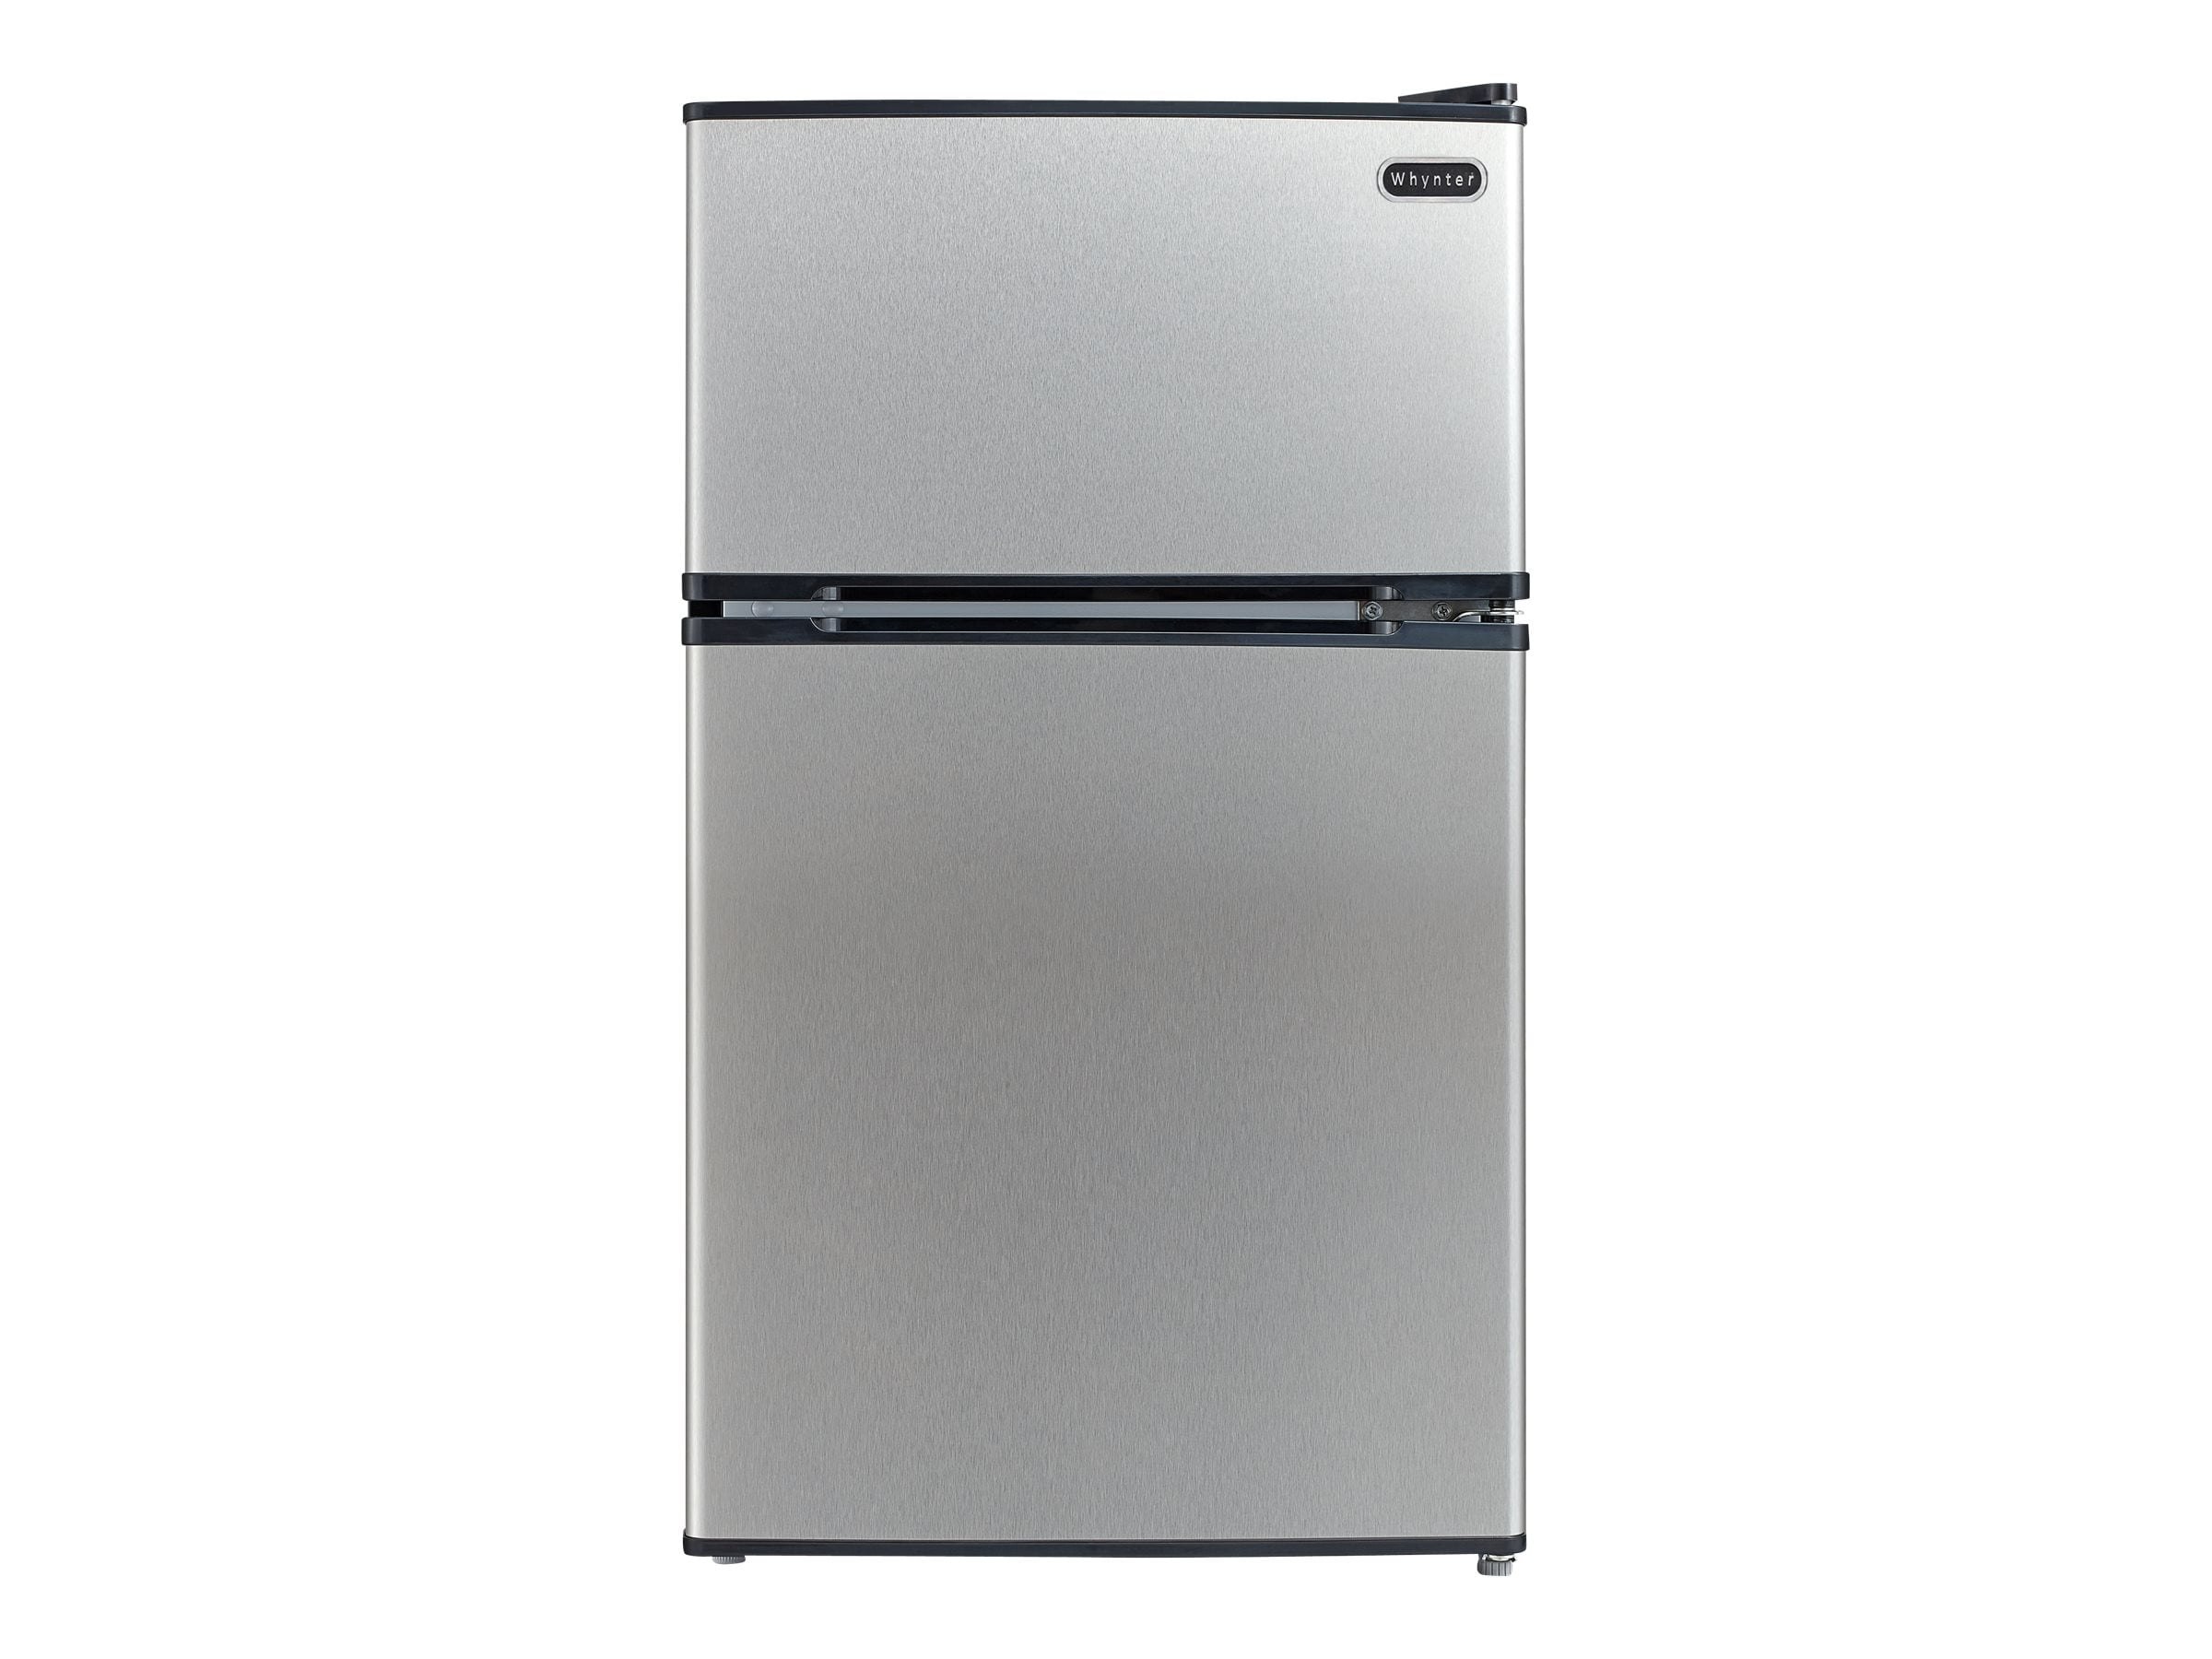 Stainless Steel Refrigerators – Built-In & Freestanding